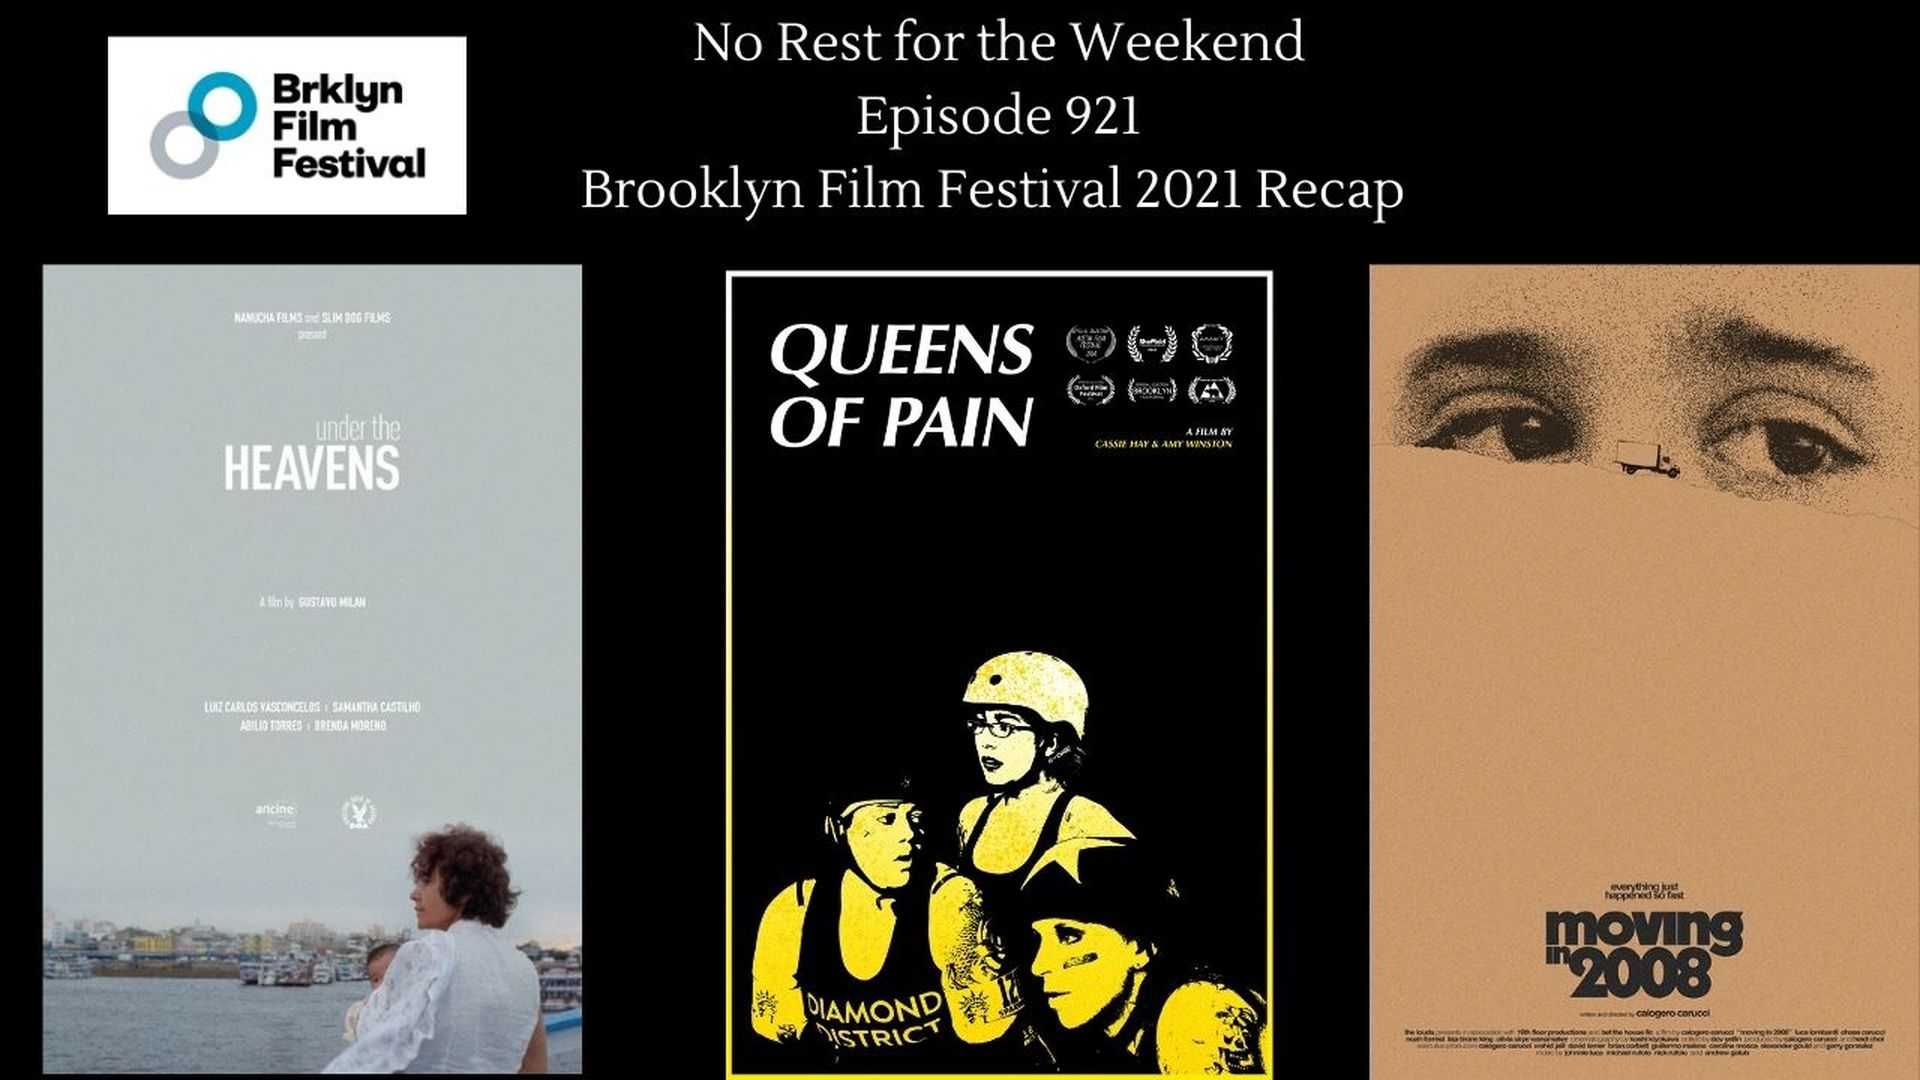 Episode 921: Brooklyn Film Festival 2021 Recap